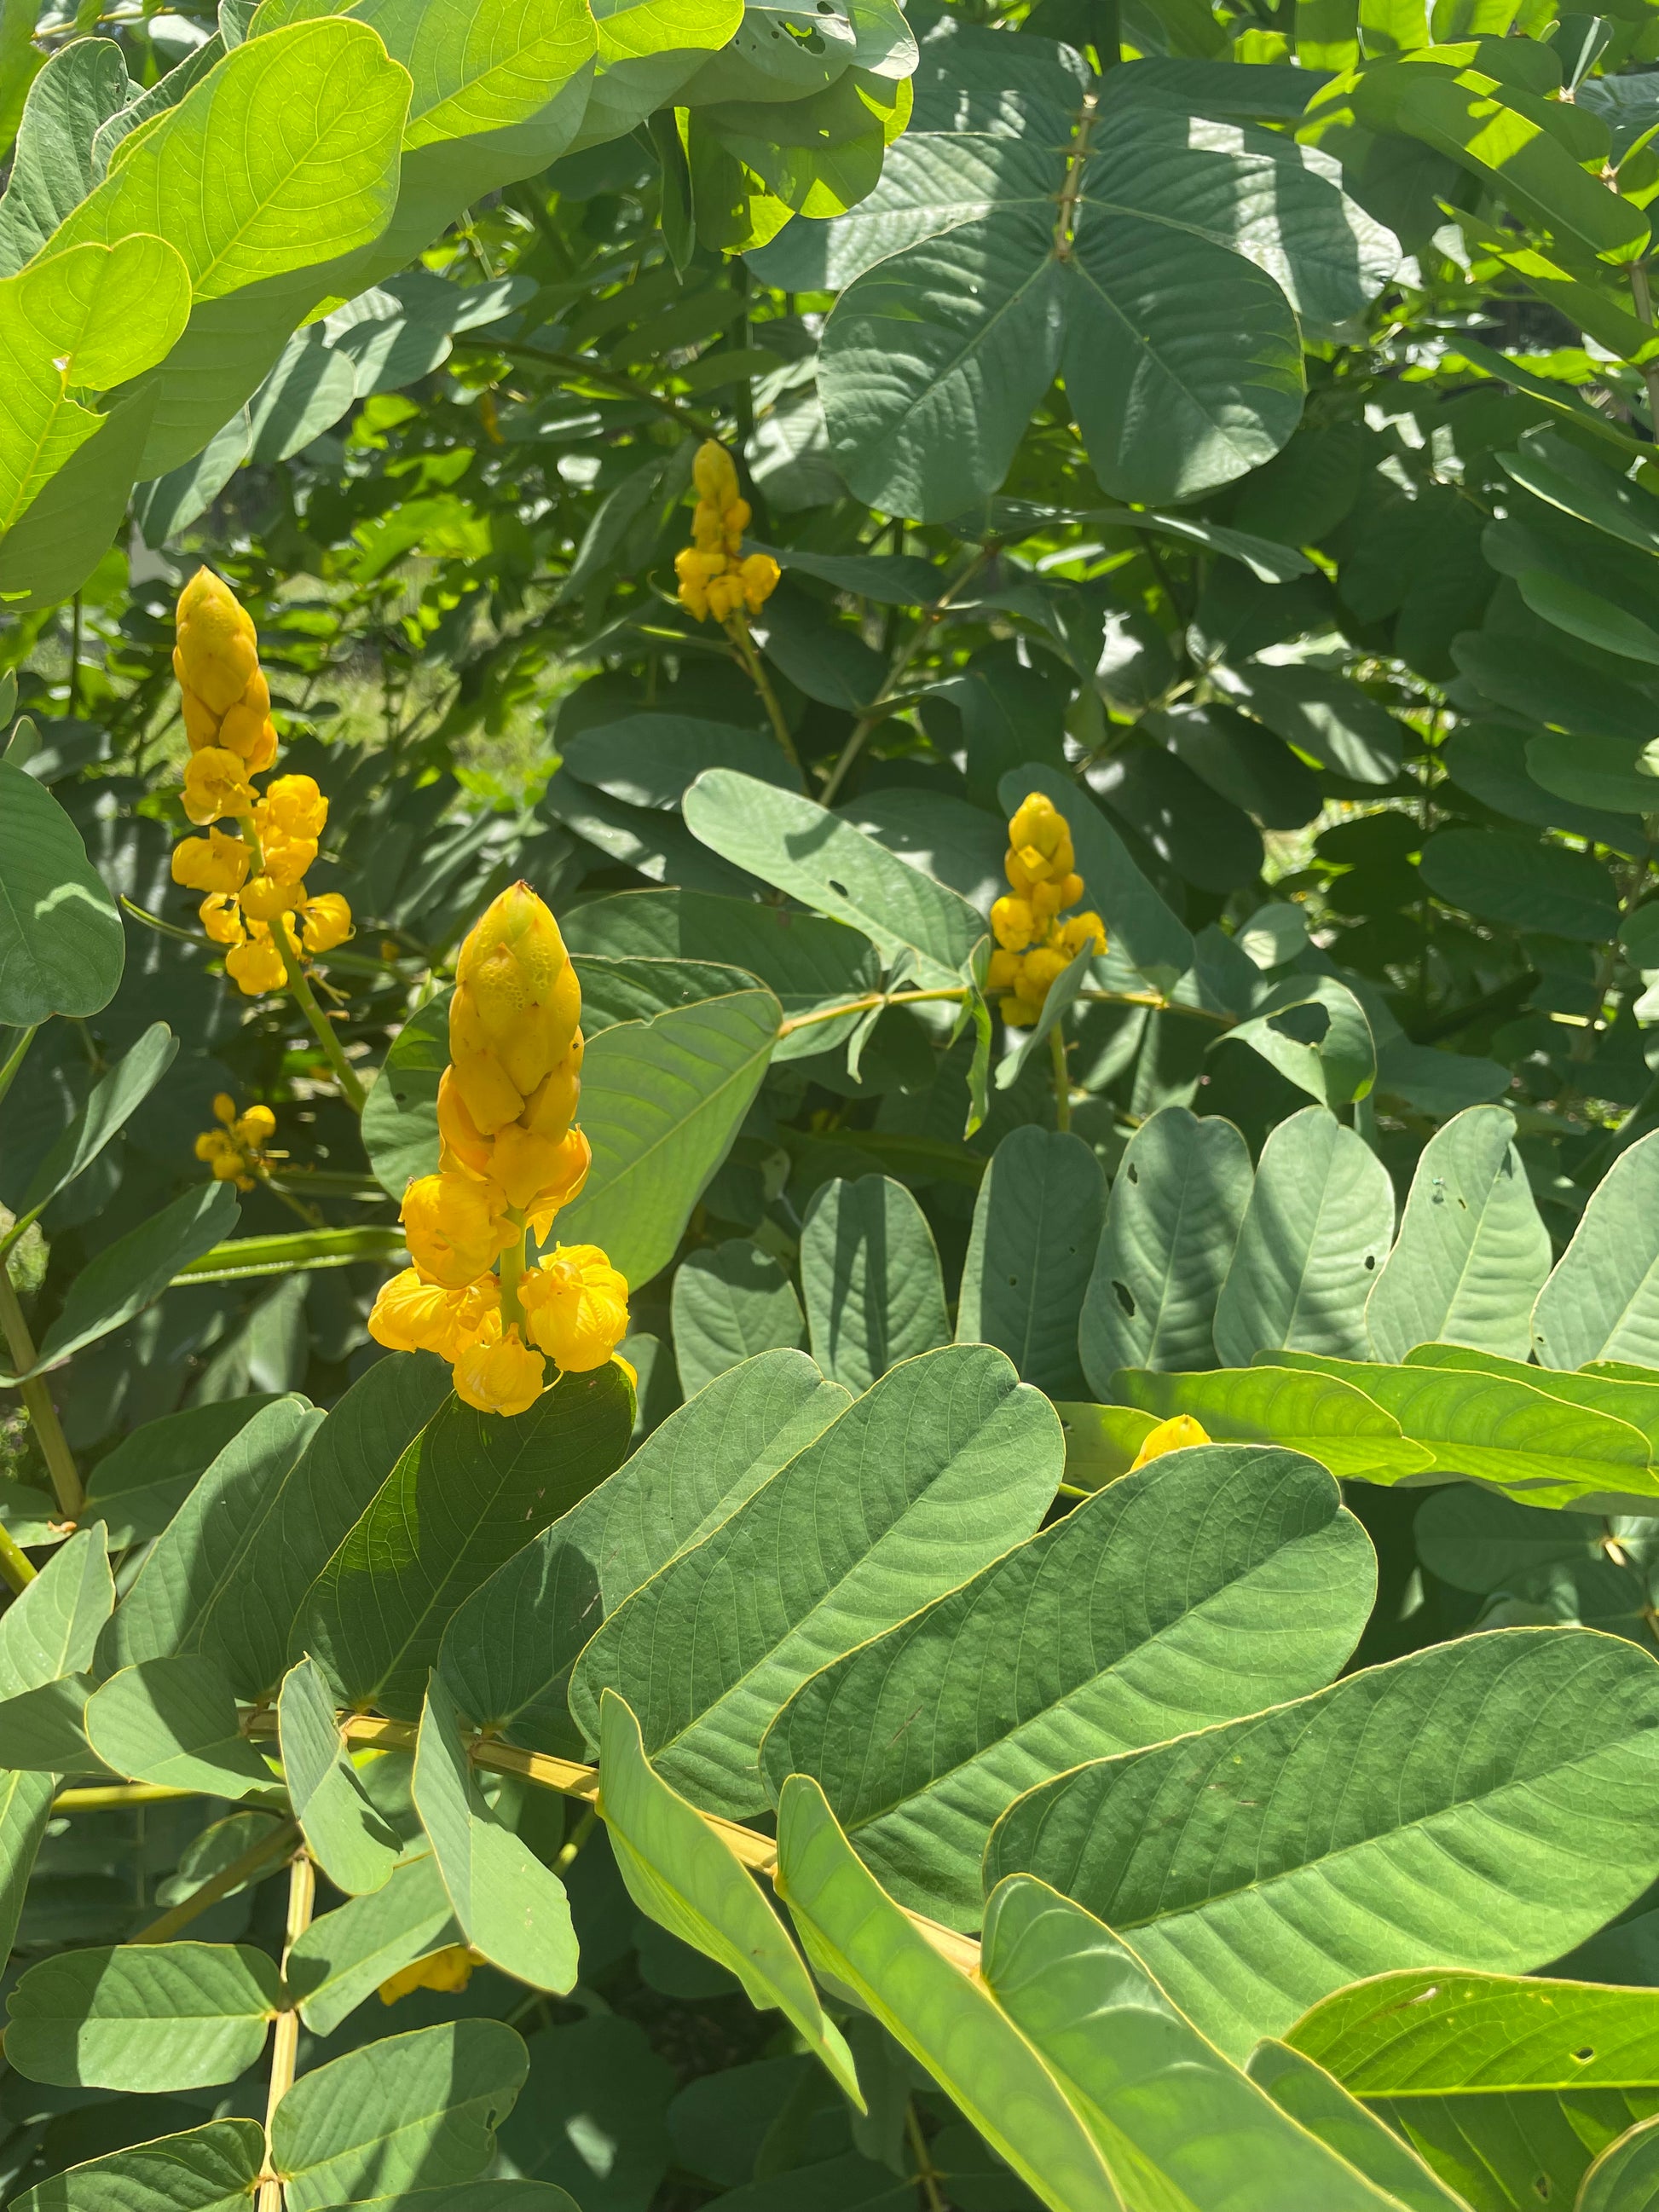 Senna alata leaf is the best host plant for orange sulphur butterfly